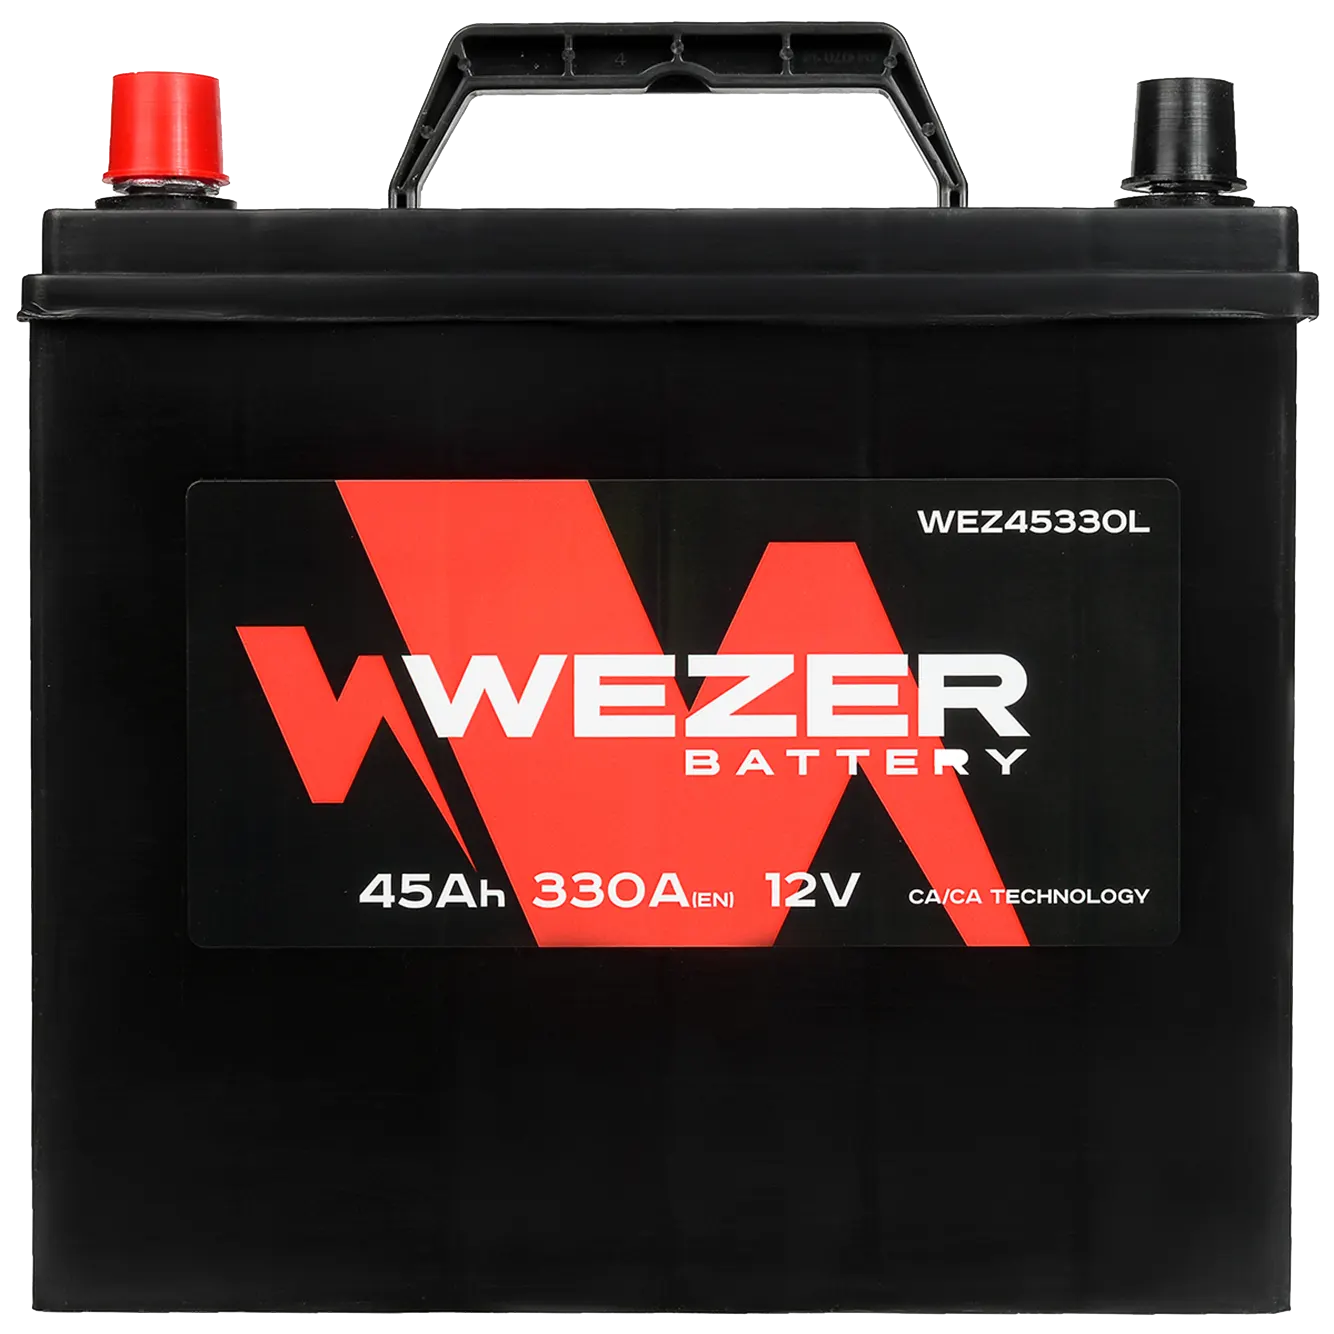 WEZER Batterie 45Ah 330A (L)